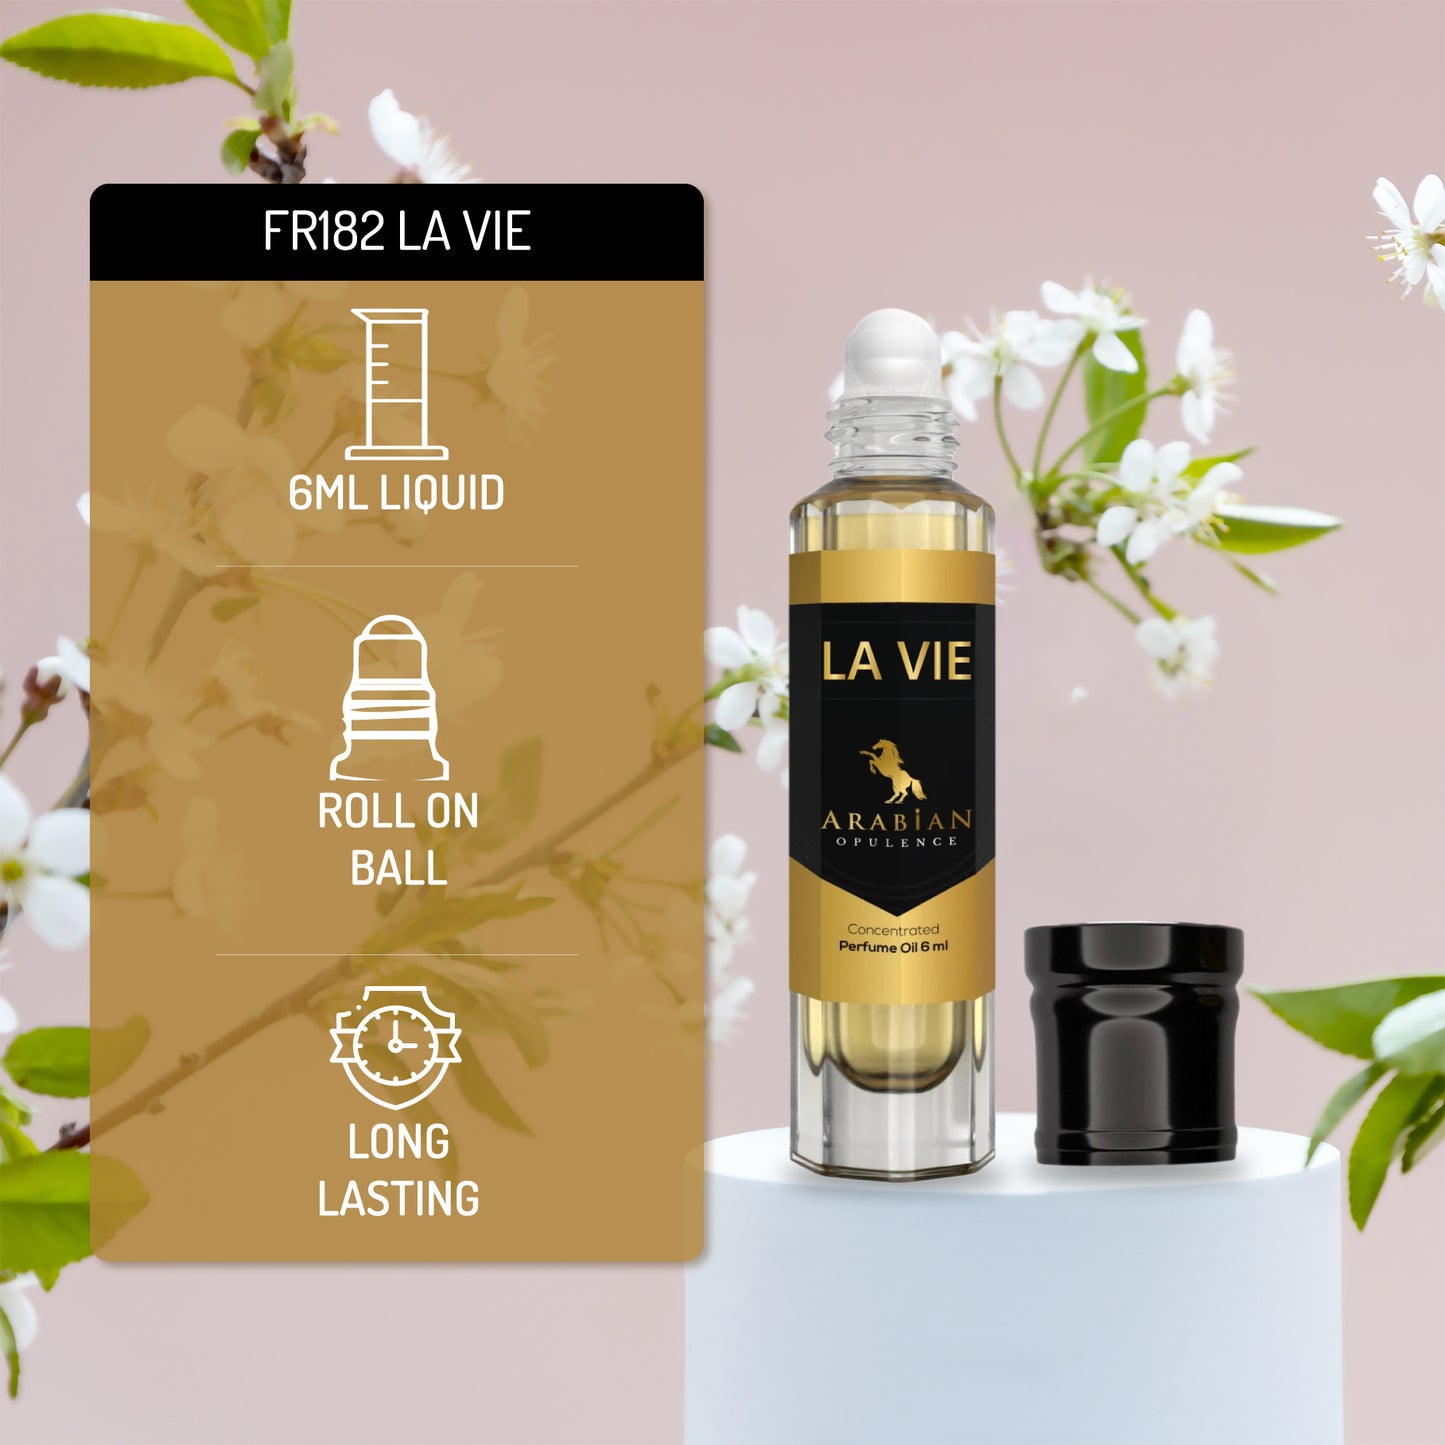 FR182 LA VIE W - Perfume Body Oil - Alcohol Free